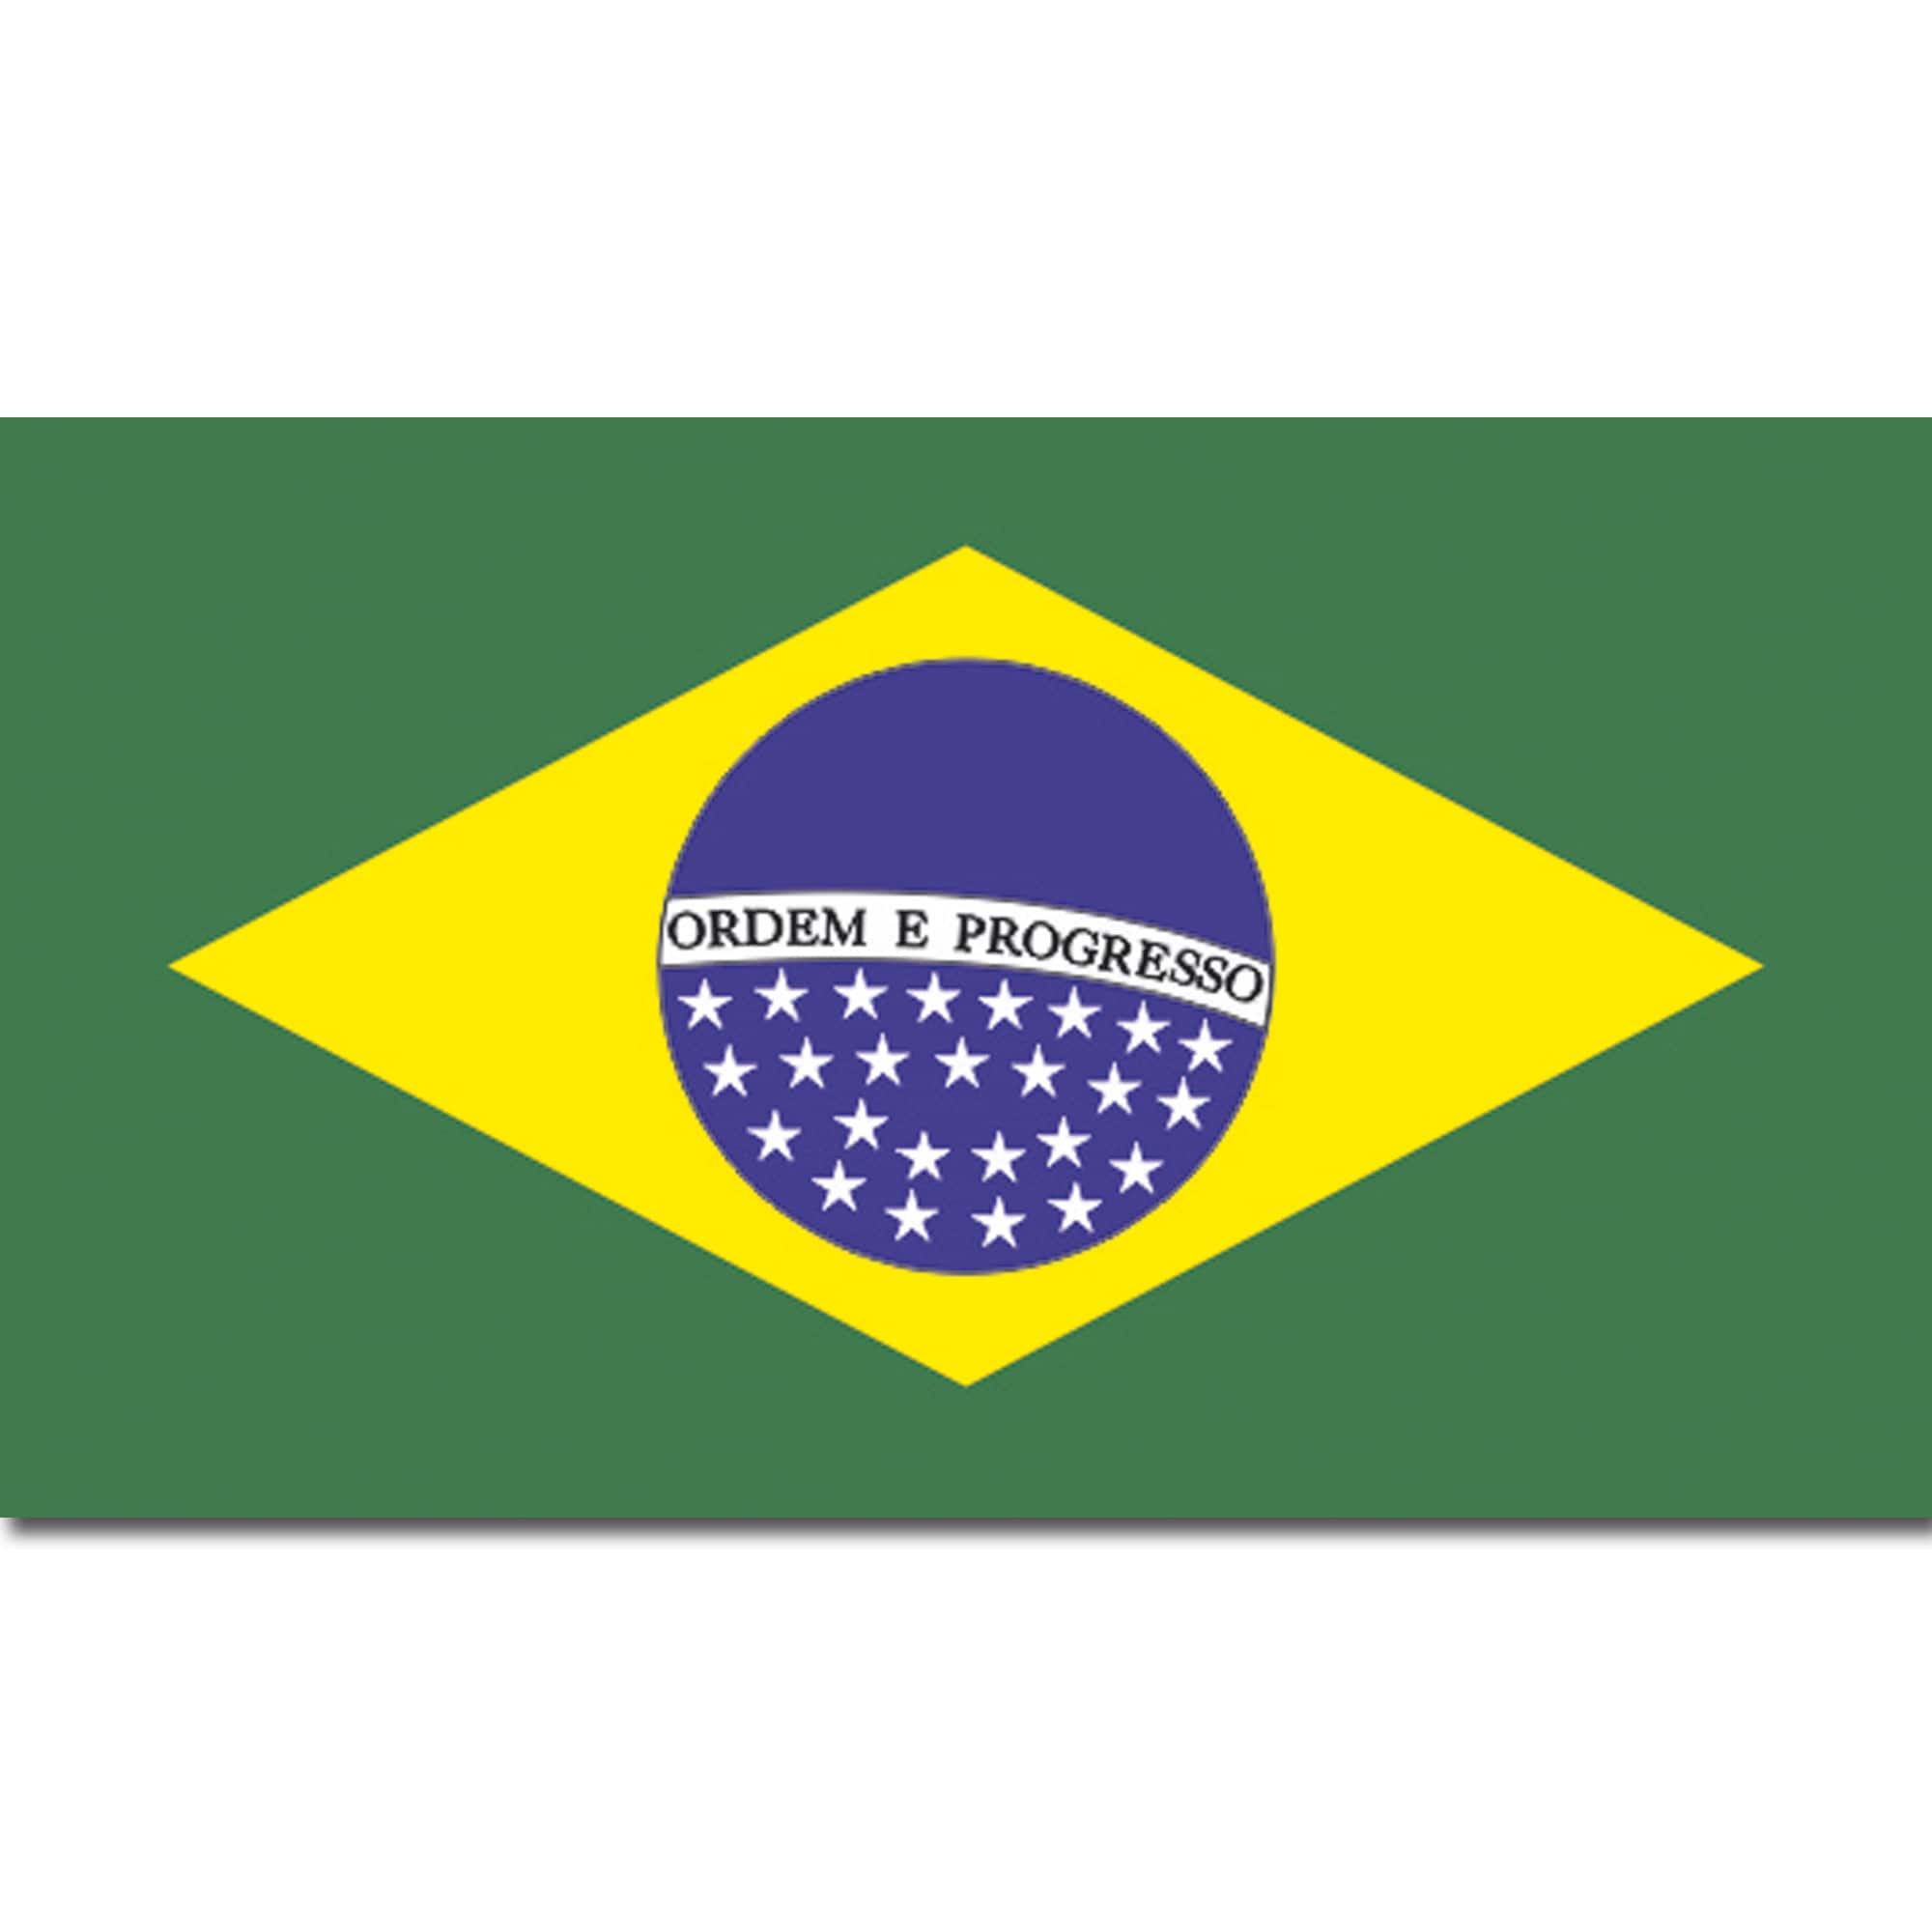 flag-brasil-flag-brasil-countries-flags-fan-articles